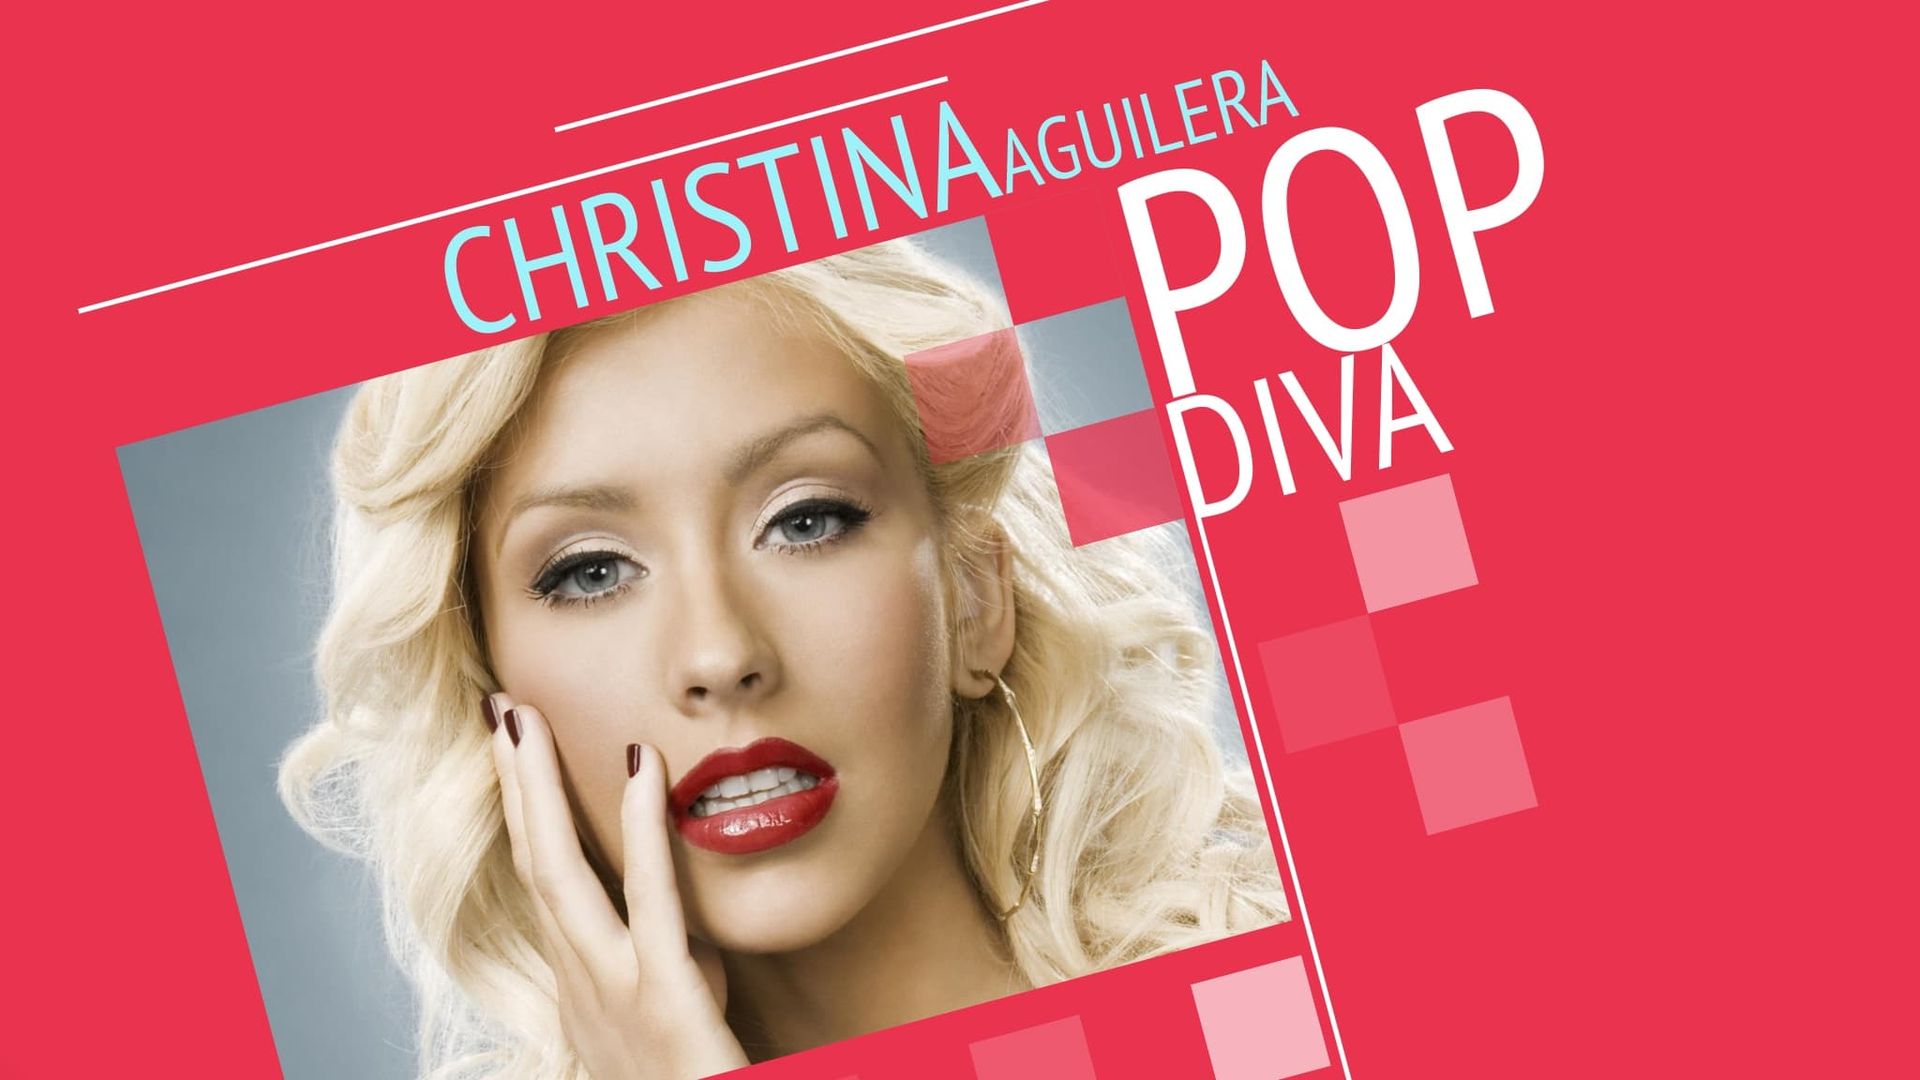 Christina Aguilera: Pop Diva background